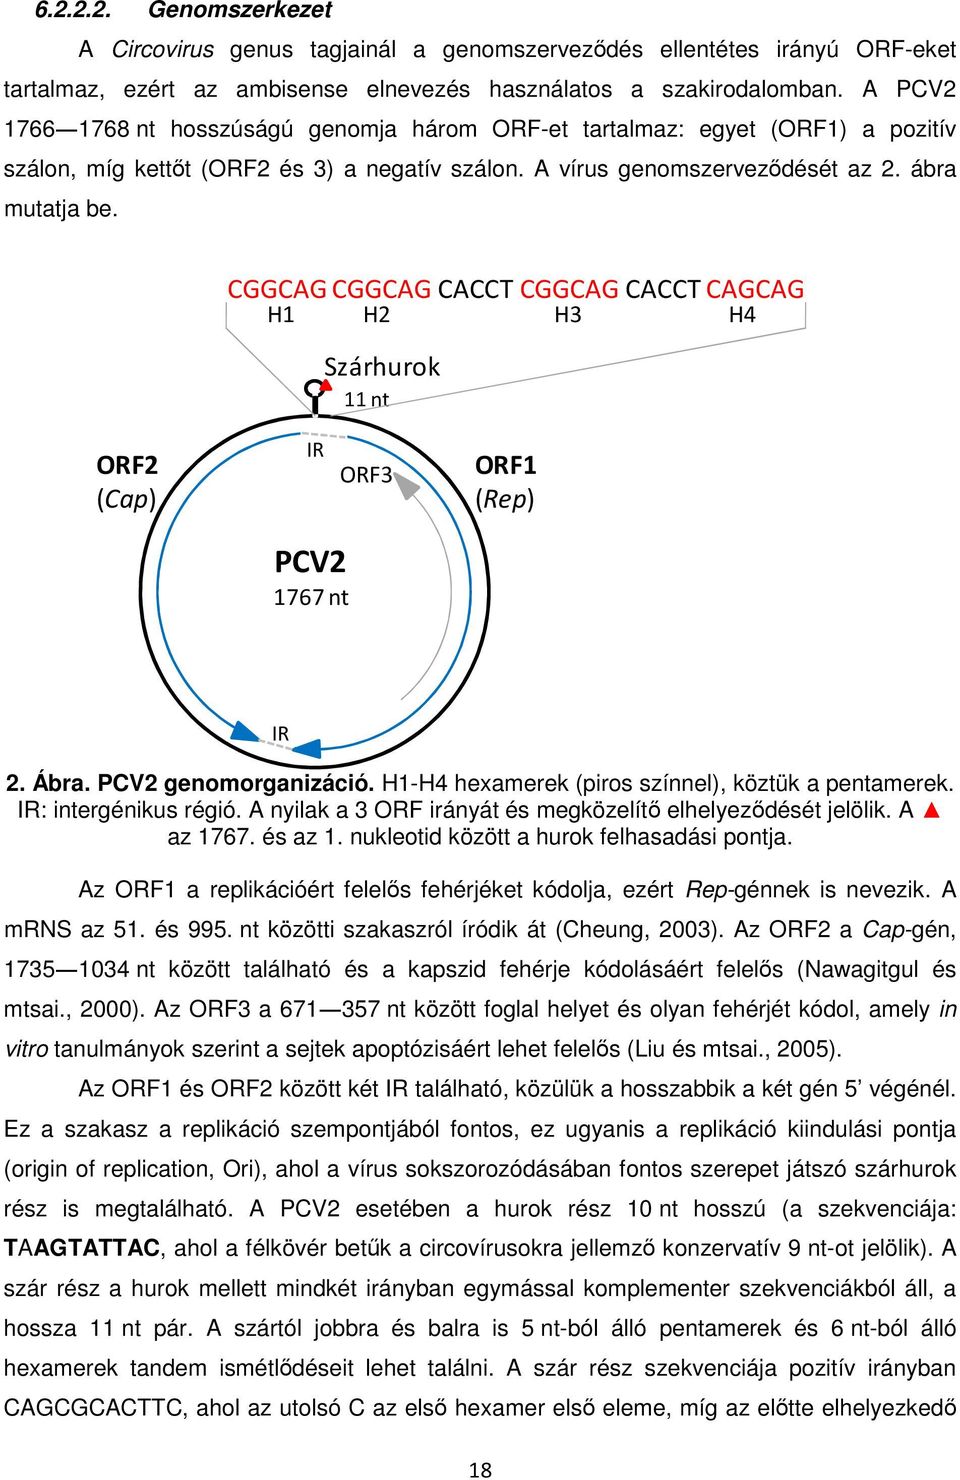 CGGCAG CGGCAG CACCT CGGCAG CACCT CAGCAG H1 H2 H3 H4 Szárhurok 11 nt ORF2 (Cap) IR ORF3 ORF1 (Rep) PCV2 1767 nt IR 2. Ábra. PCV2 genomorganizáció. H1-H4 hexamerek (piros színnel), köztük a pentamerek.